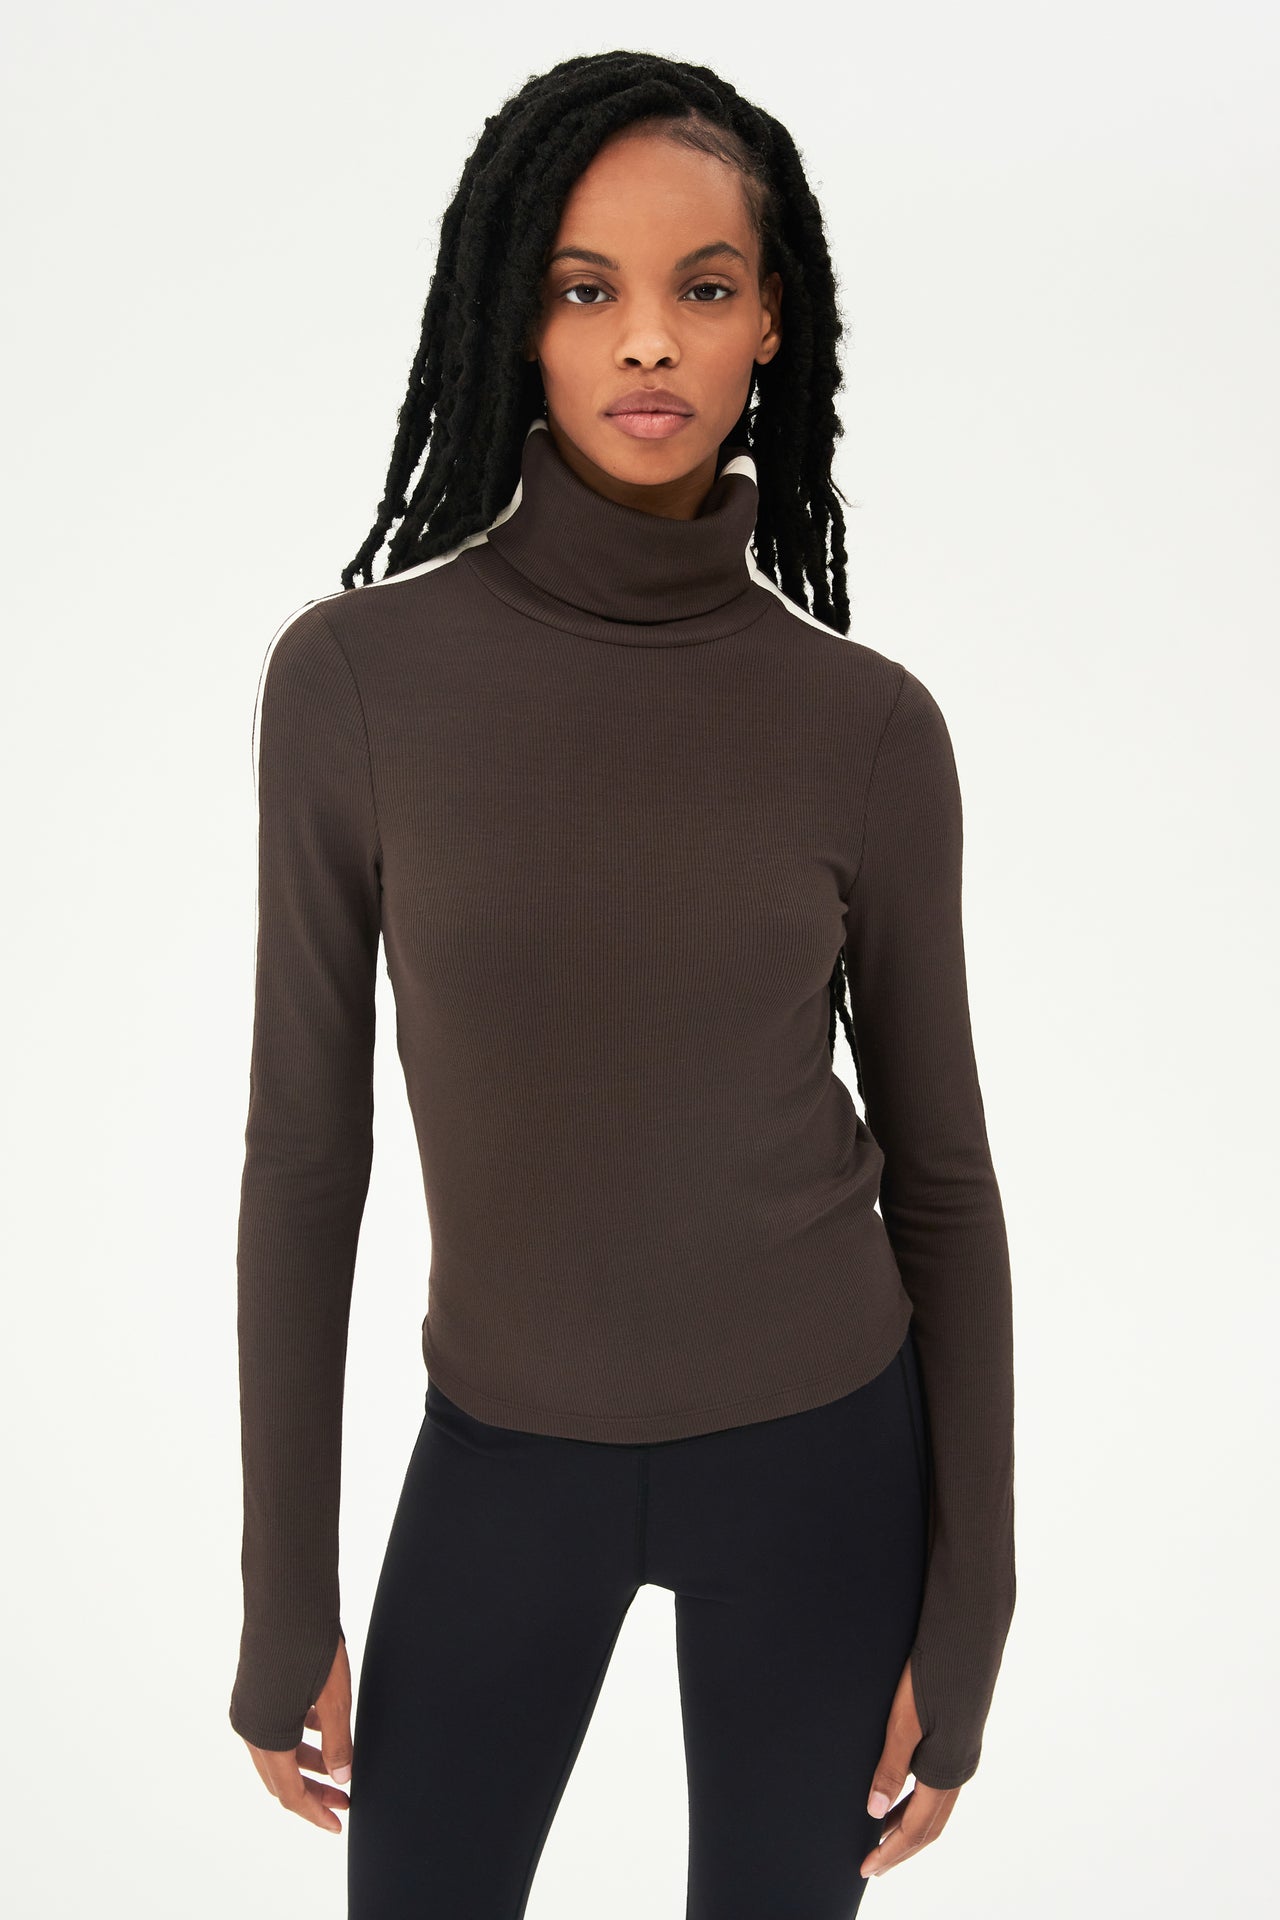 A woman wearing a SPLITS59 Jackson Rib Turtleneck in Dark Chocolate/Creme and black leggings.